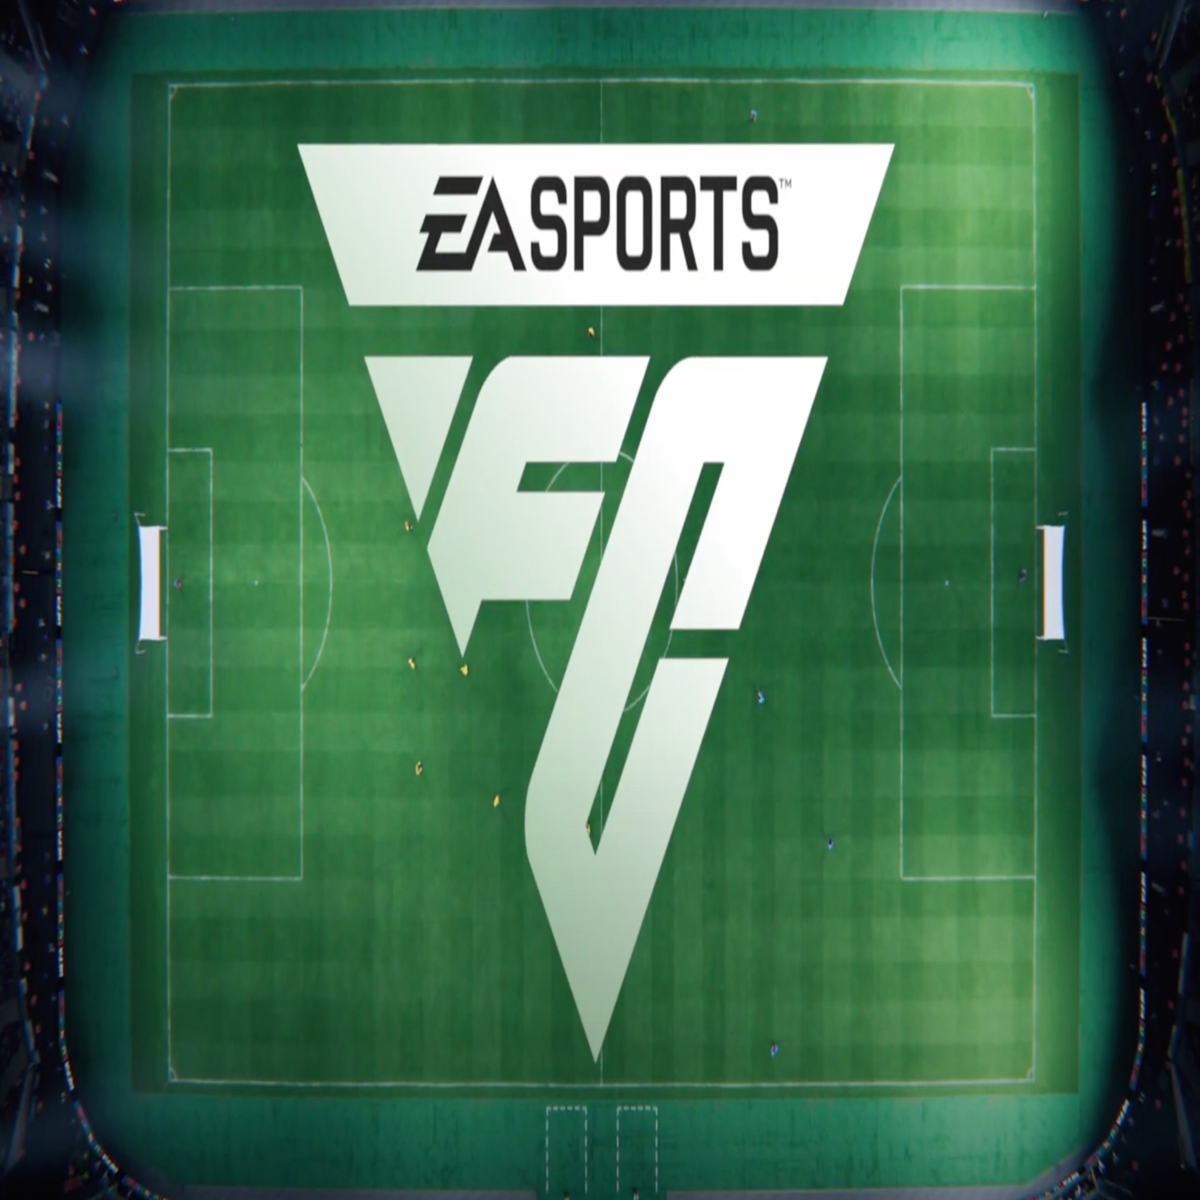 EA Sports FC 24 release date announced